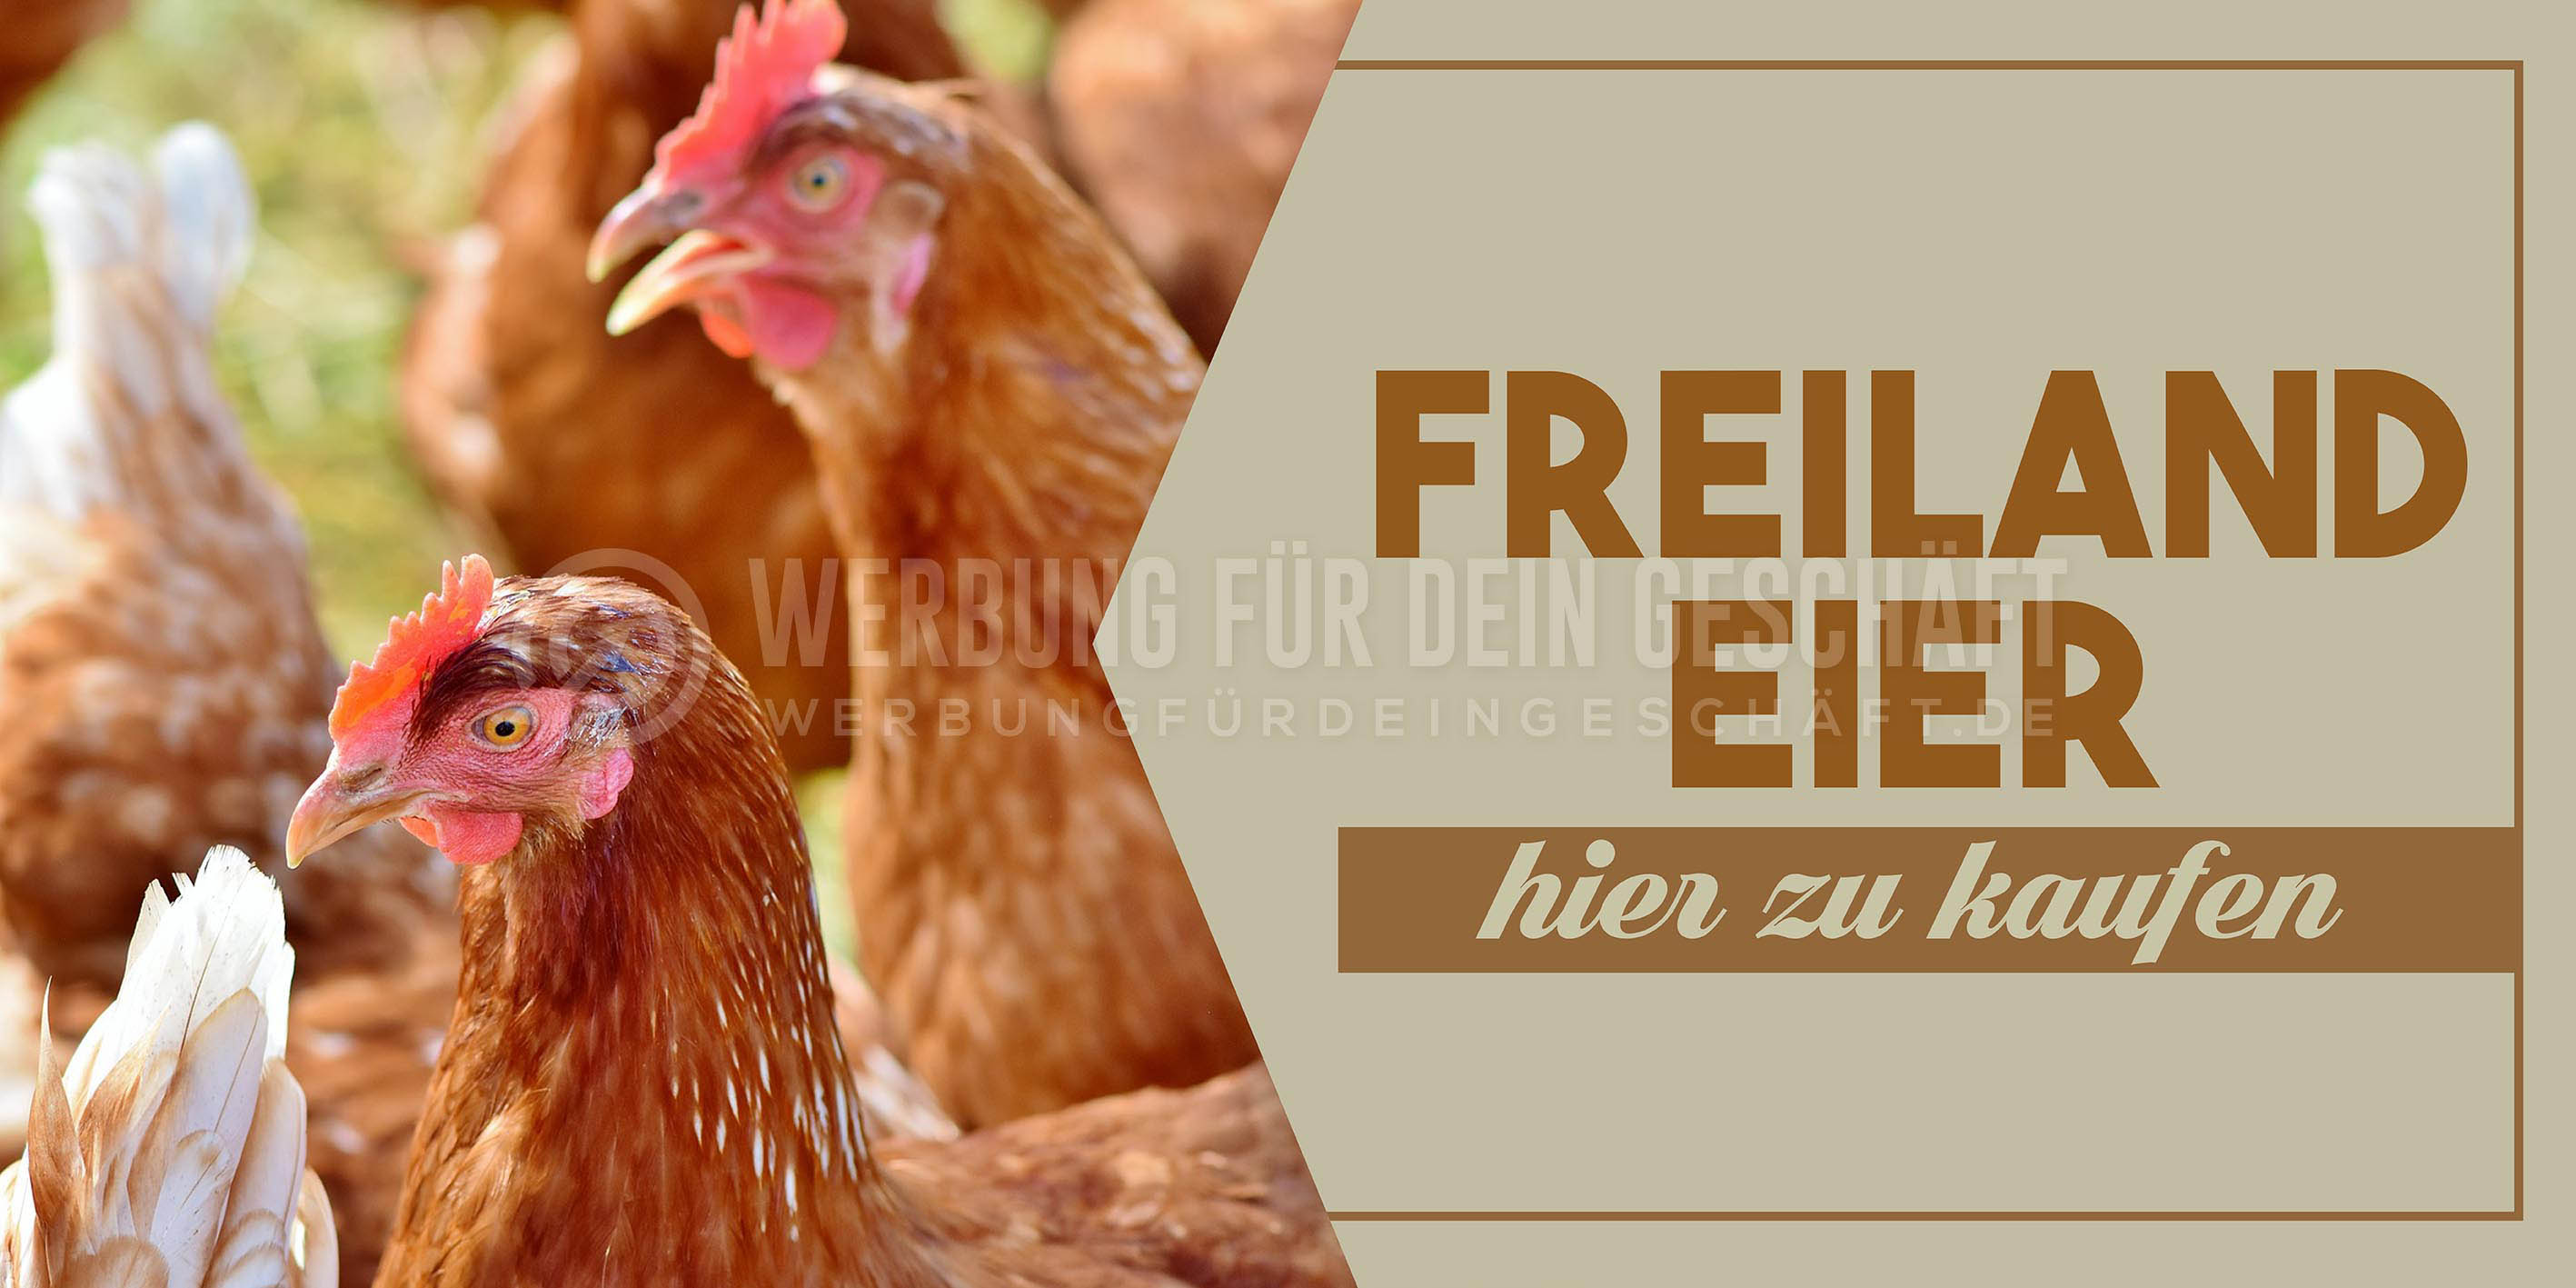 2:1 | Freiland Eier Plakat | Werbeposter | 2 zu 1 Format